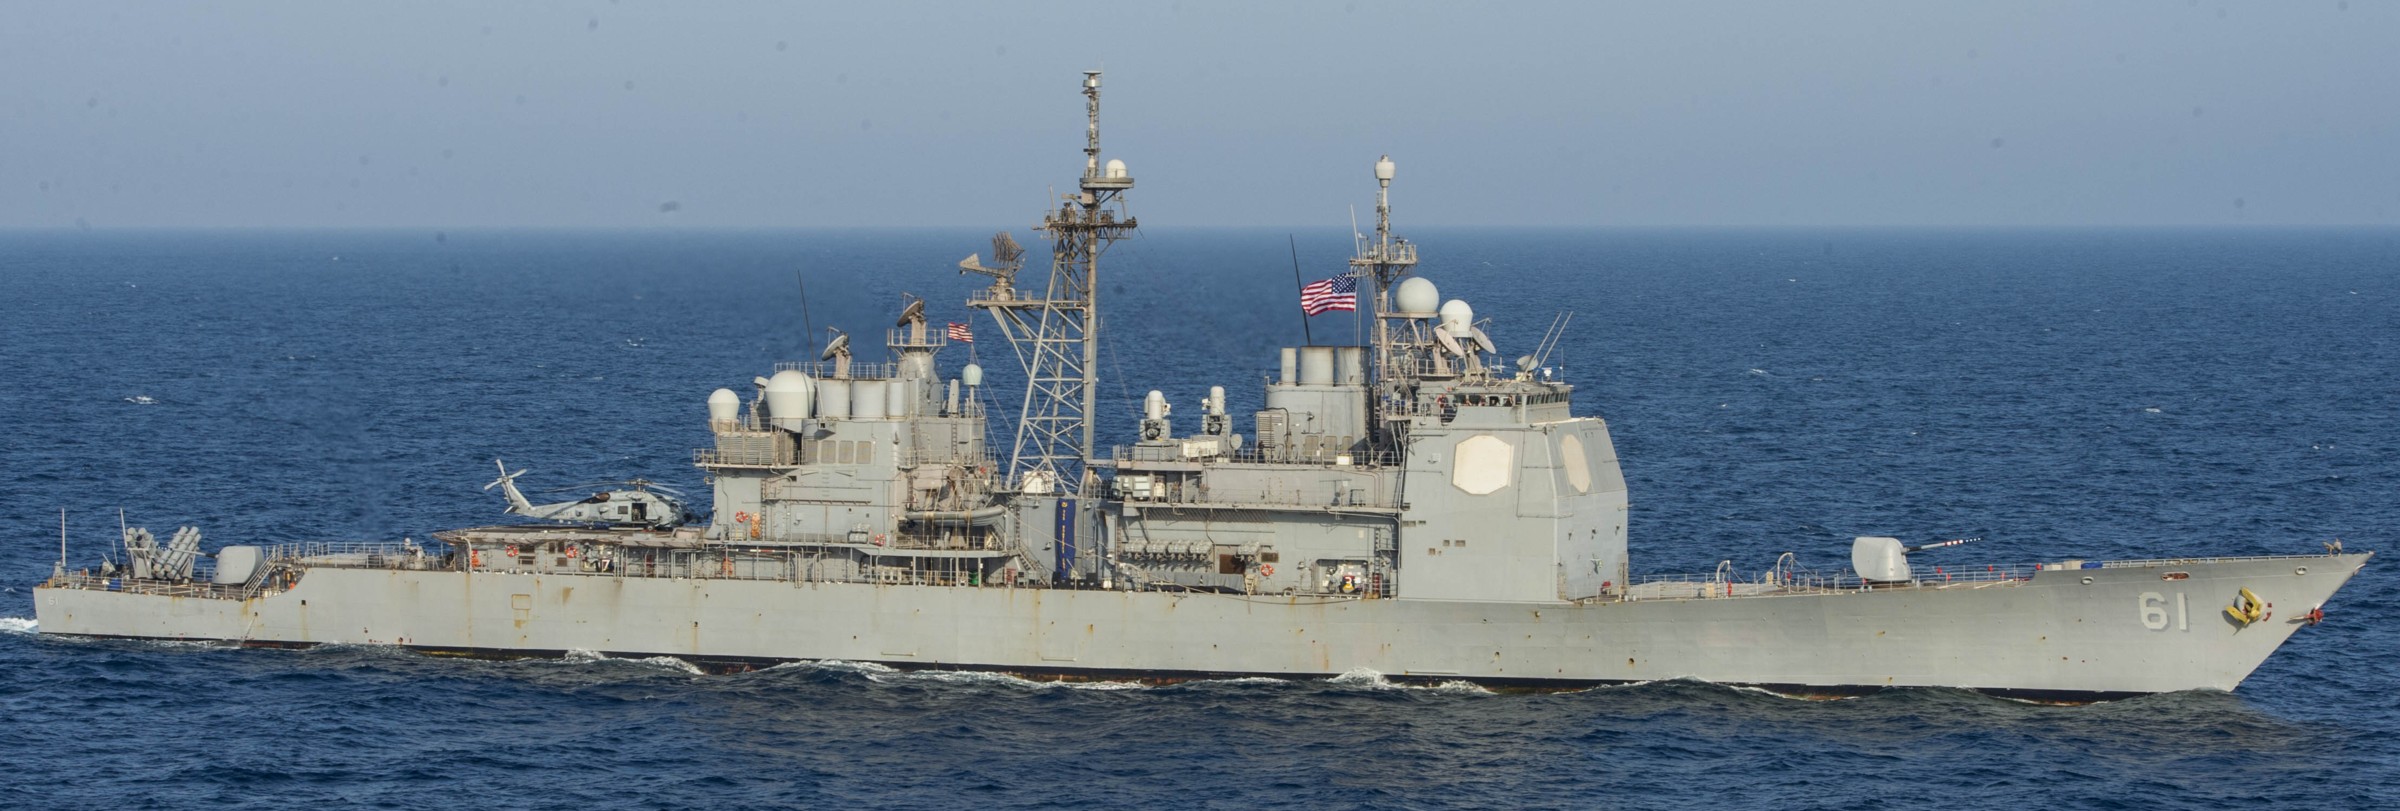 cg-61 uss monterey ticonderoga class guided missile cruiser aegis us navy 112